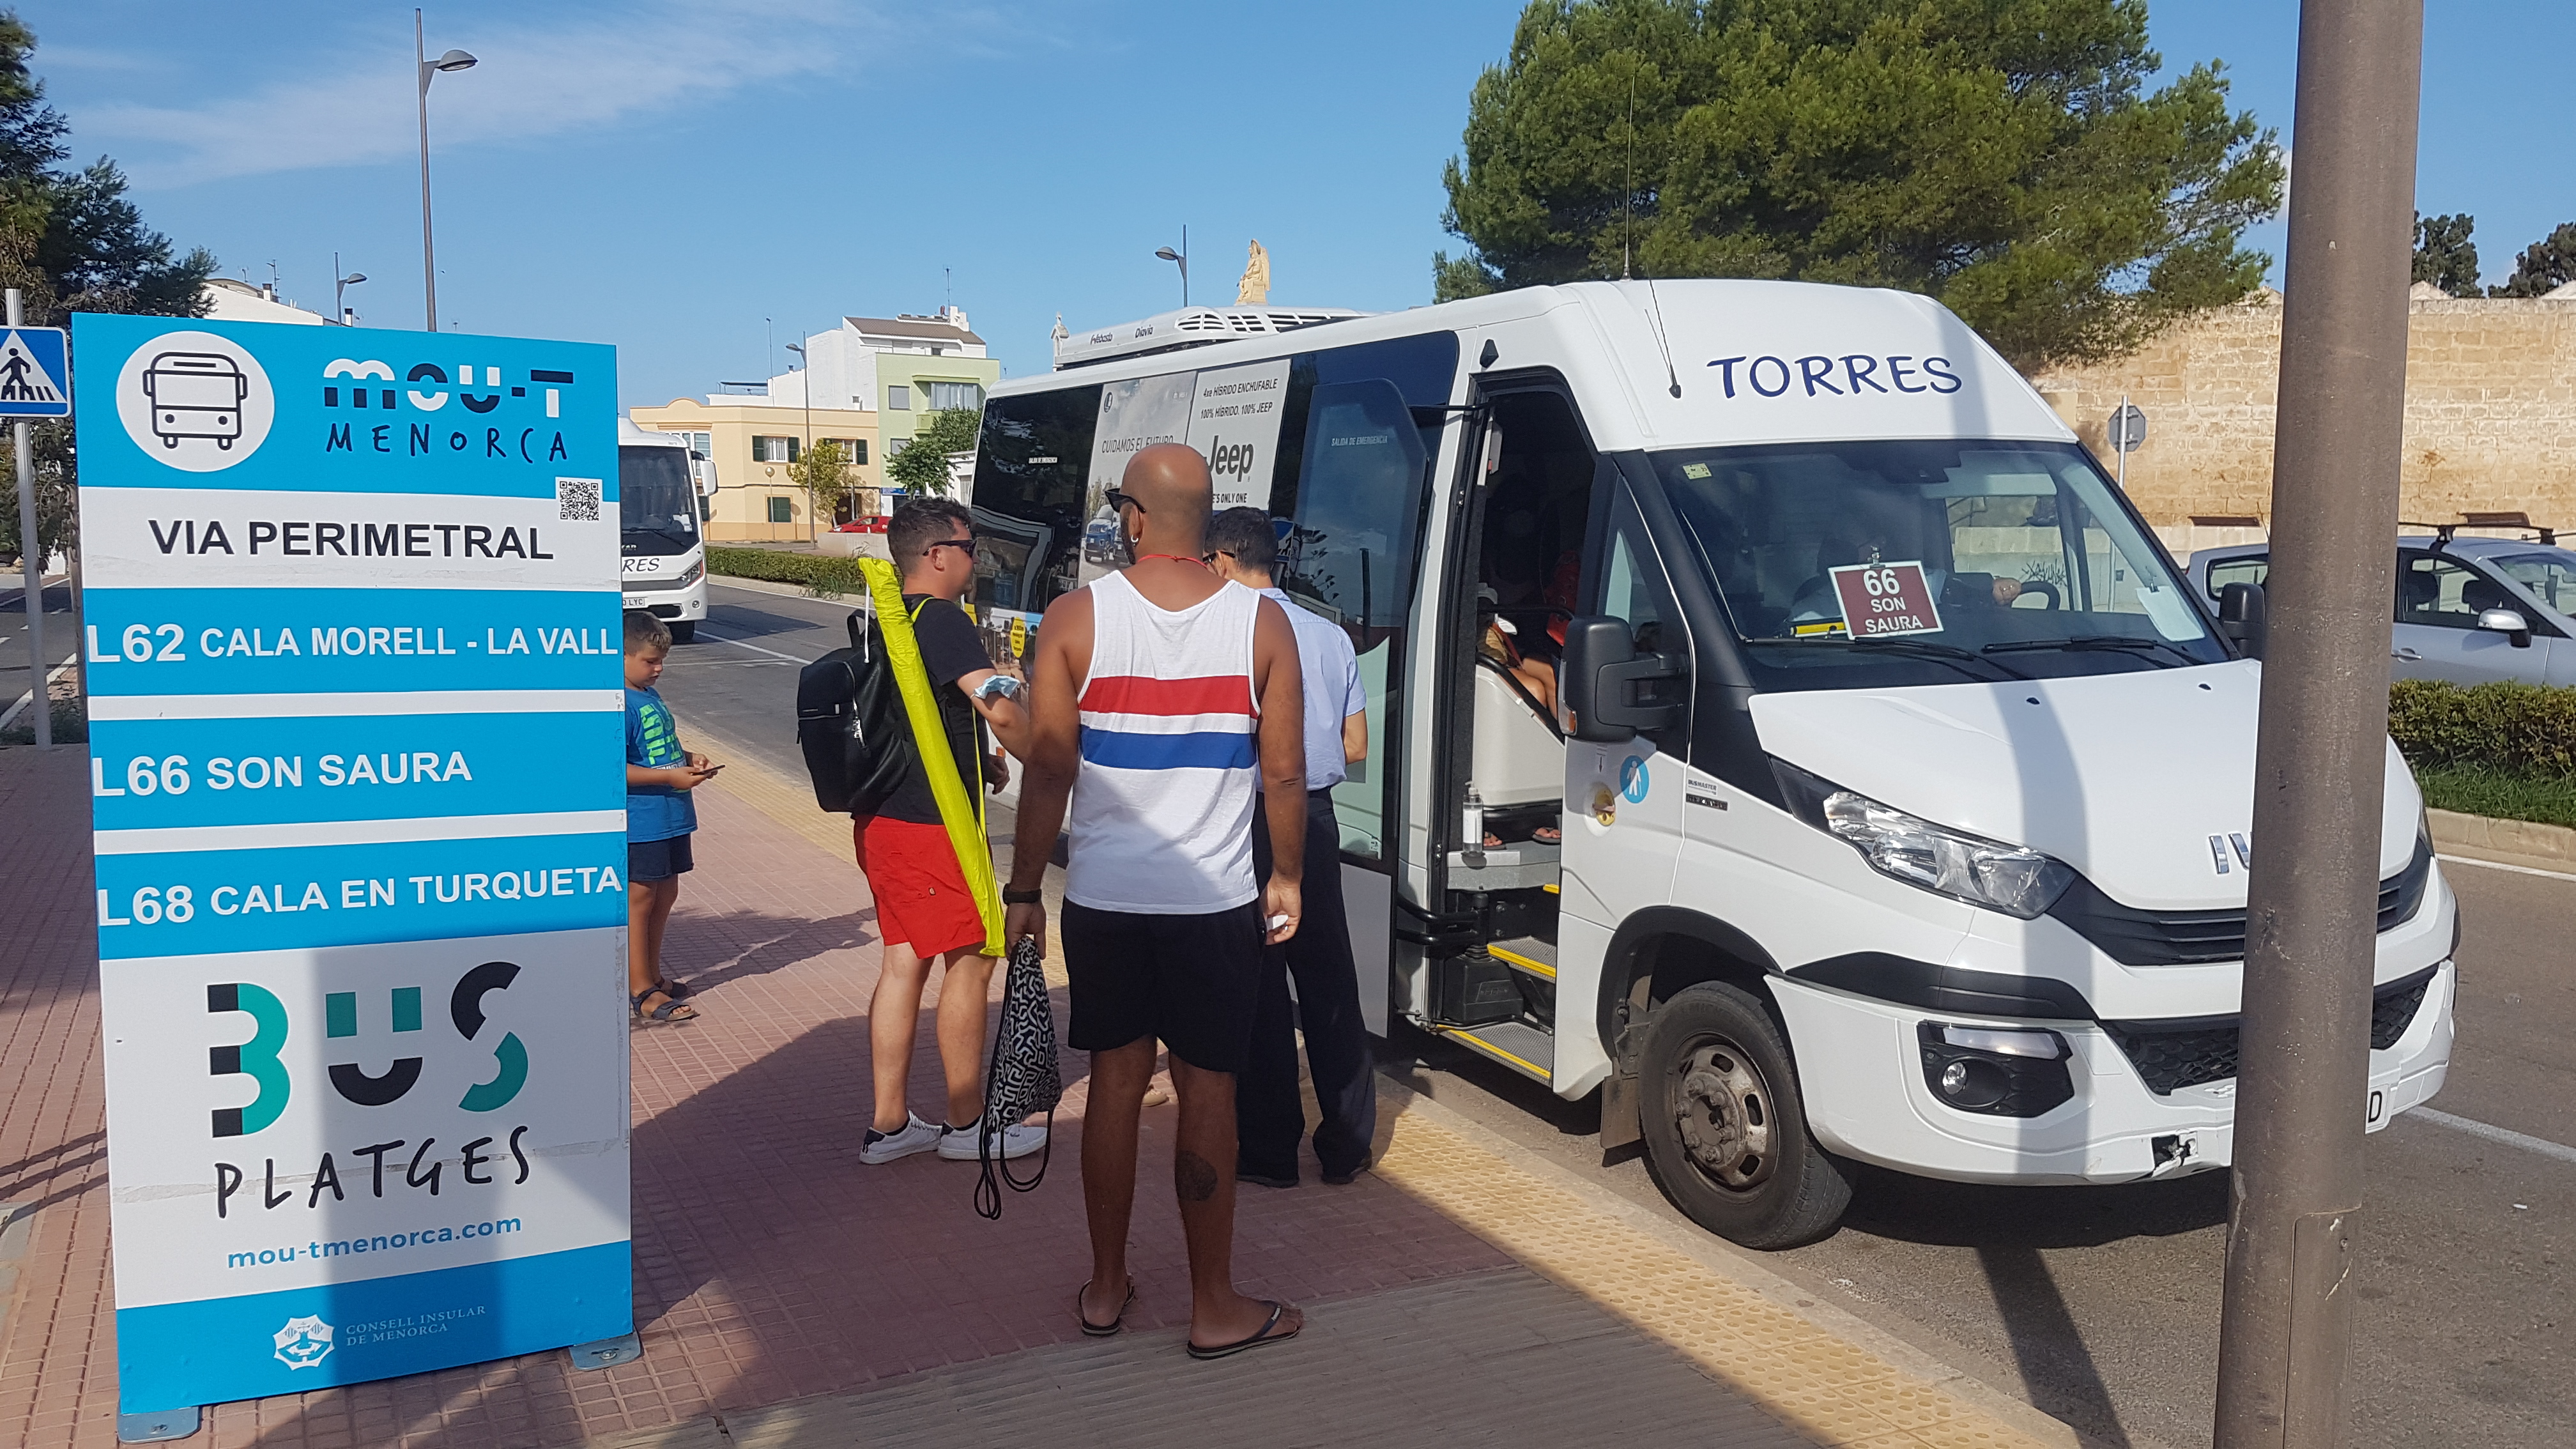 Menorca Buses to Beach